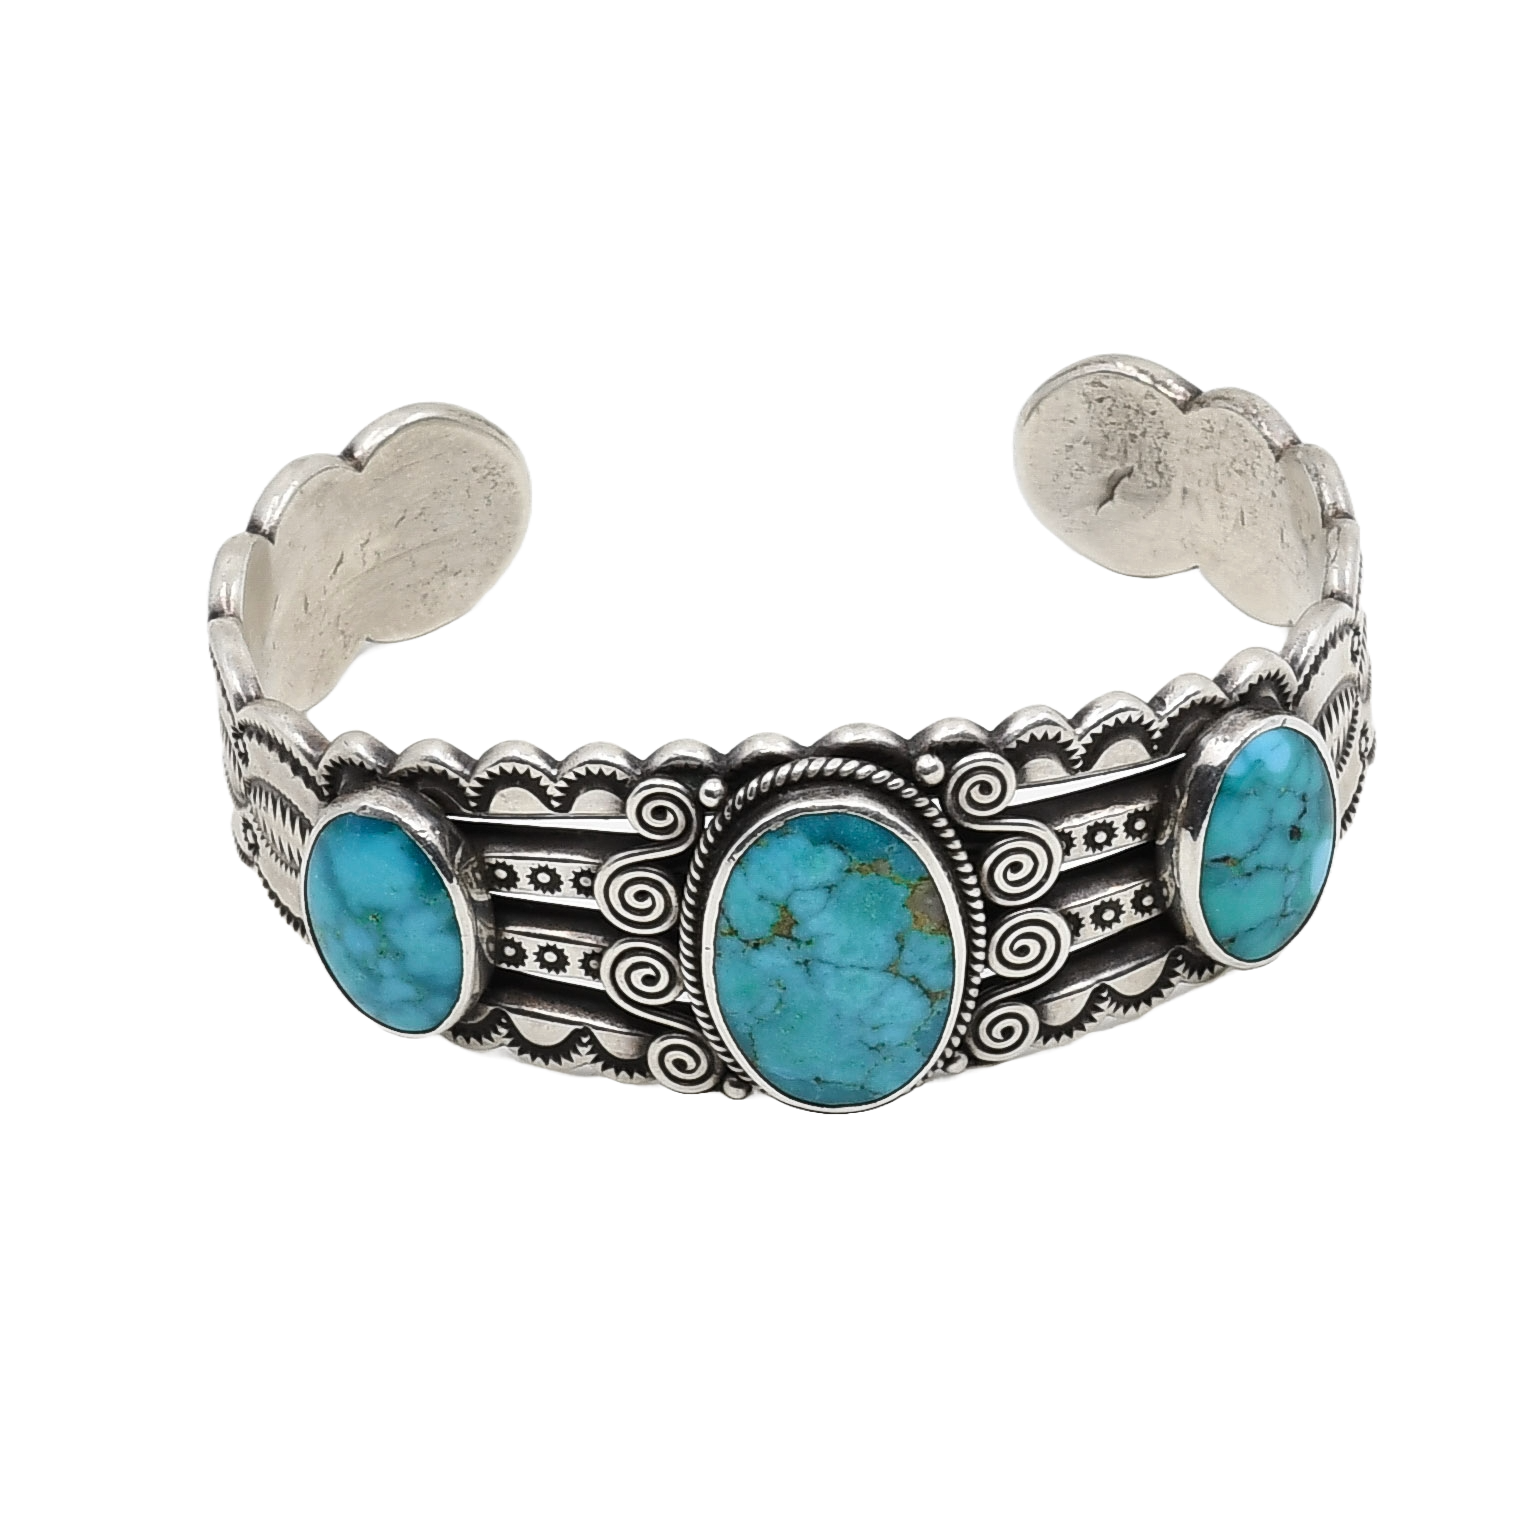 Perry Shorty Bracelet of Three Turquoise Stones